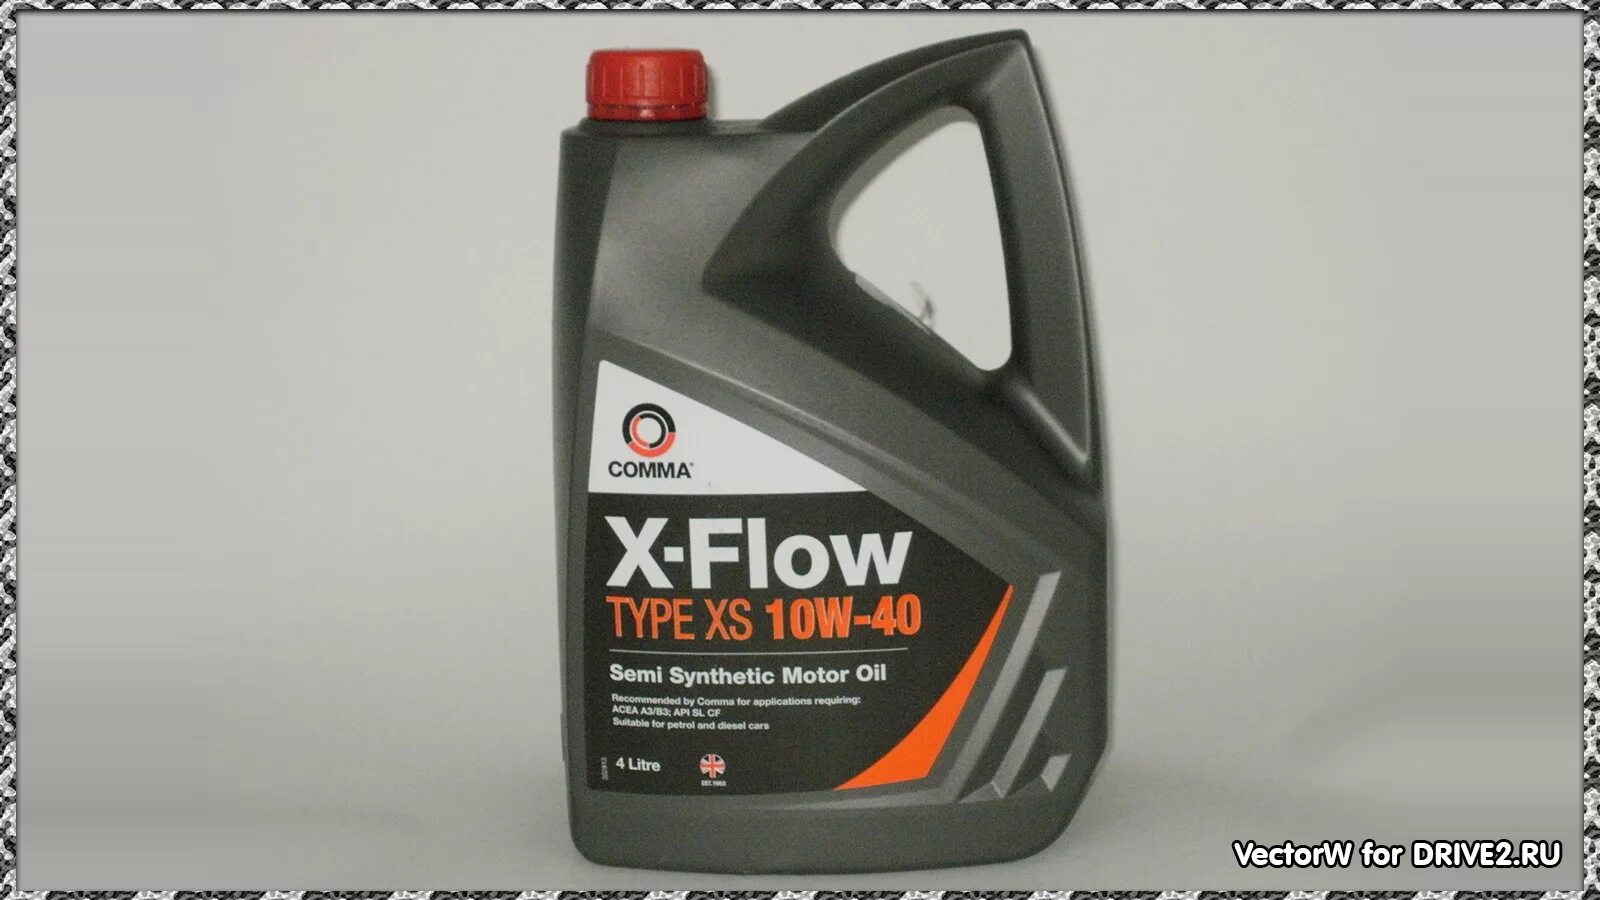 Comma x-Flow Type s 10w-40 4л. Масло моторное comma xfs5l. Comma 10w40 SL/CF Xtech 5л артикул. X-Flow Type XS 10w-40 5л.